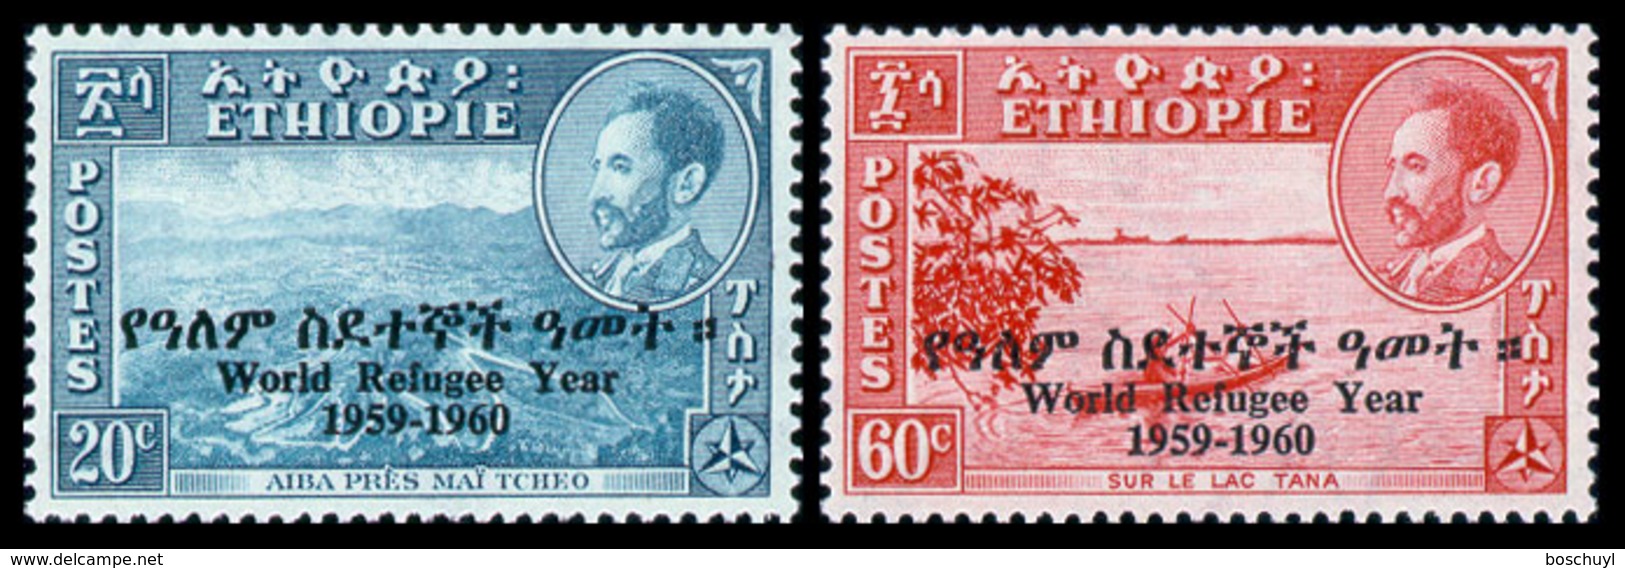 Ethiopia, 1960, World Refugee Year, United Nations, MNH, Michel 389-390 - Etiopia